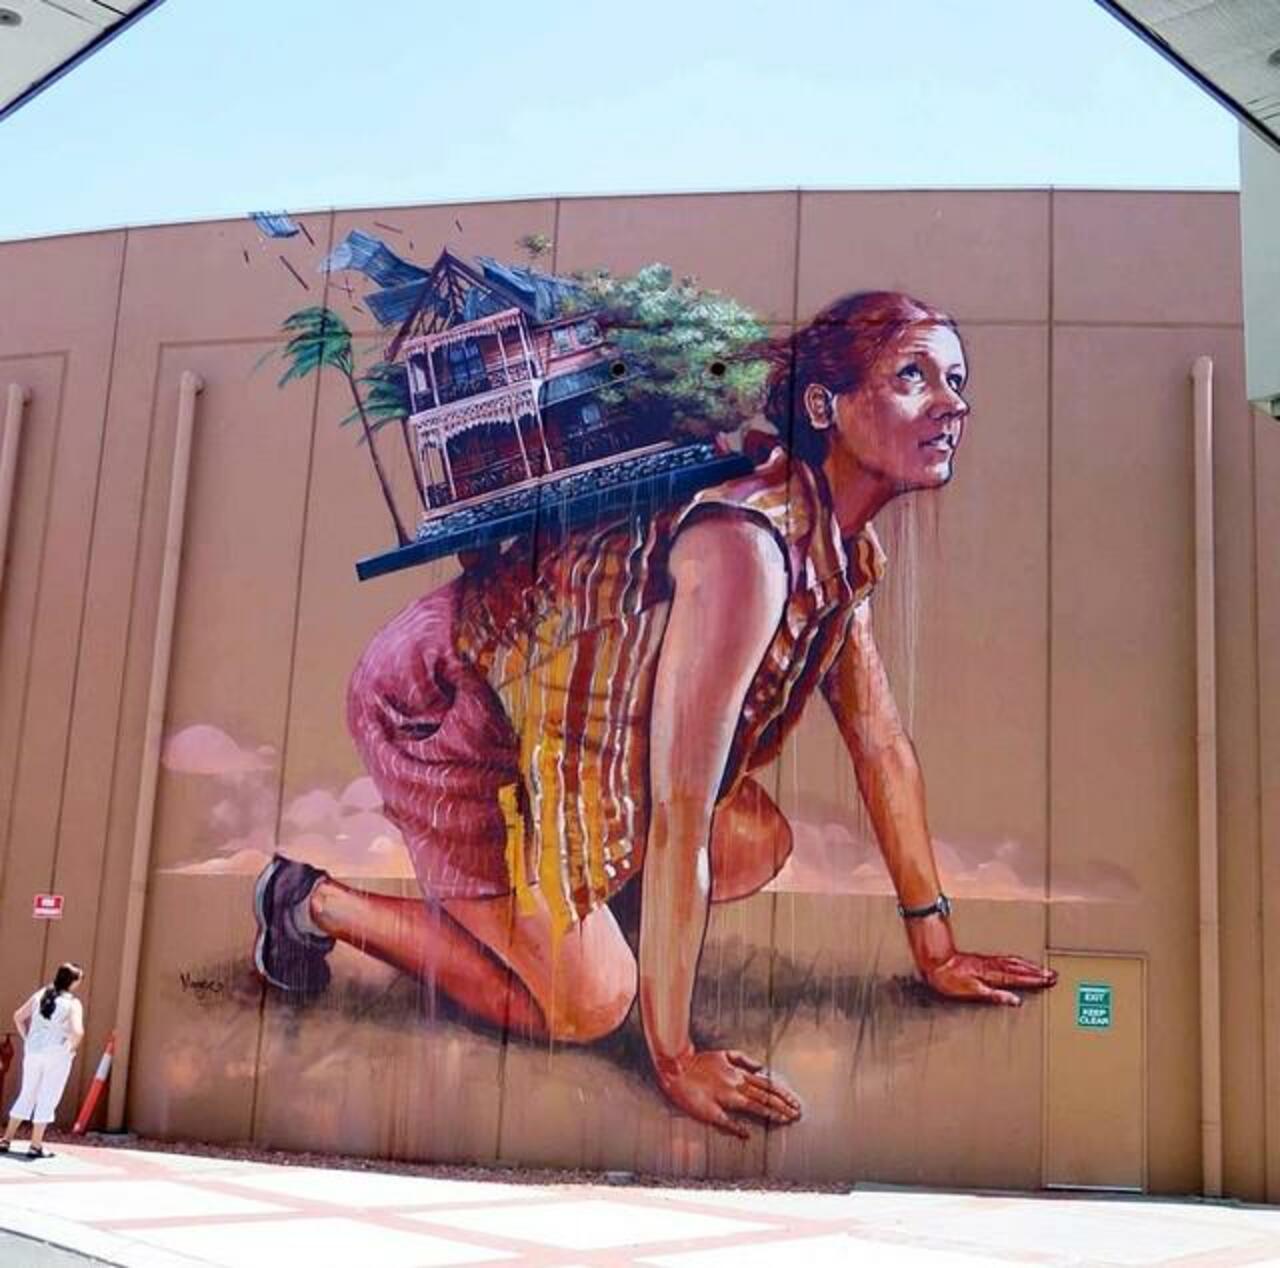 Latest Fintan Magee massive Street Art piece in Bunbury, Western Australia 

#art #graffiti #mural #streetart http://t.co/hdZeMTPjaw